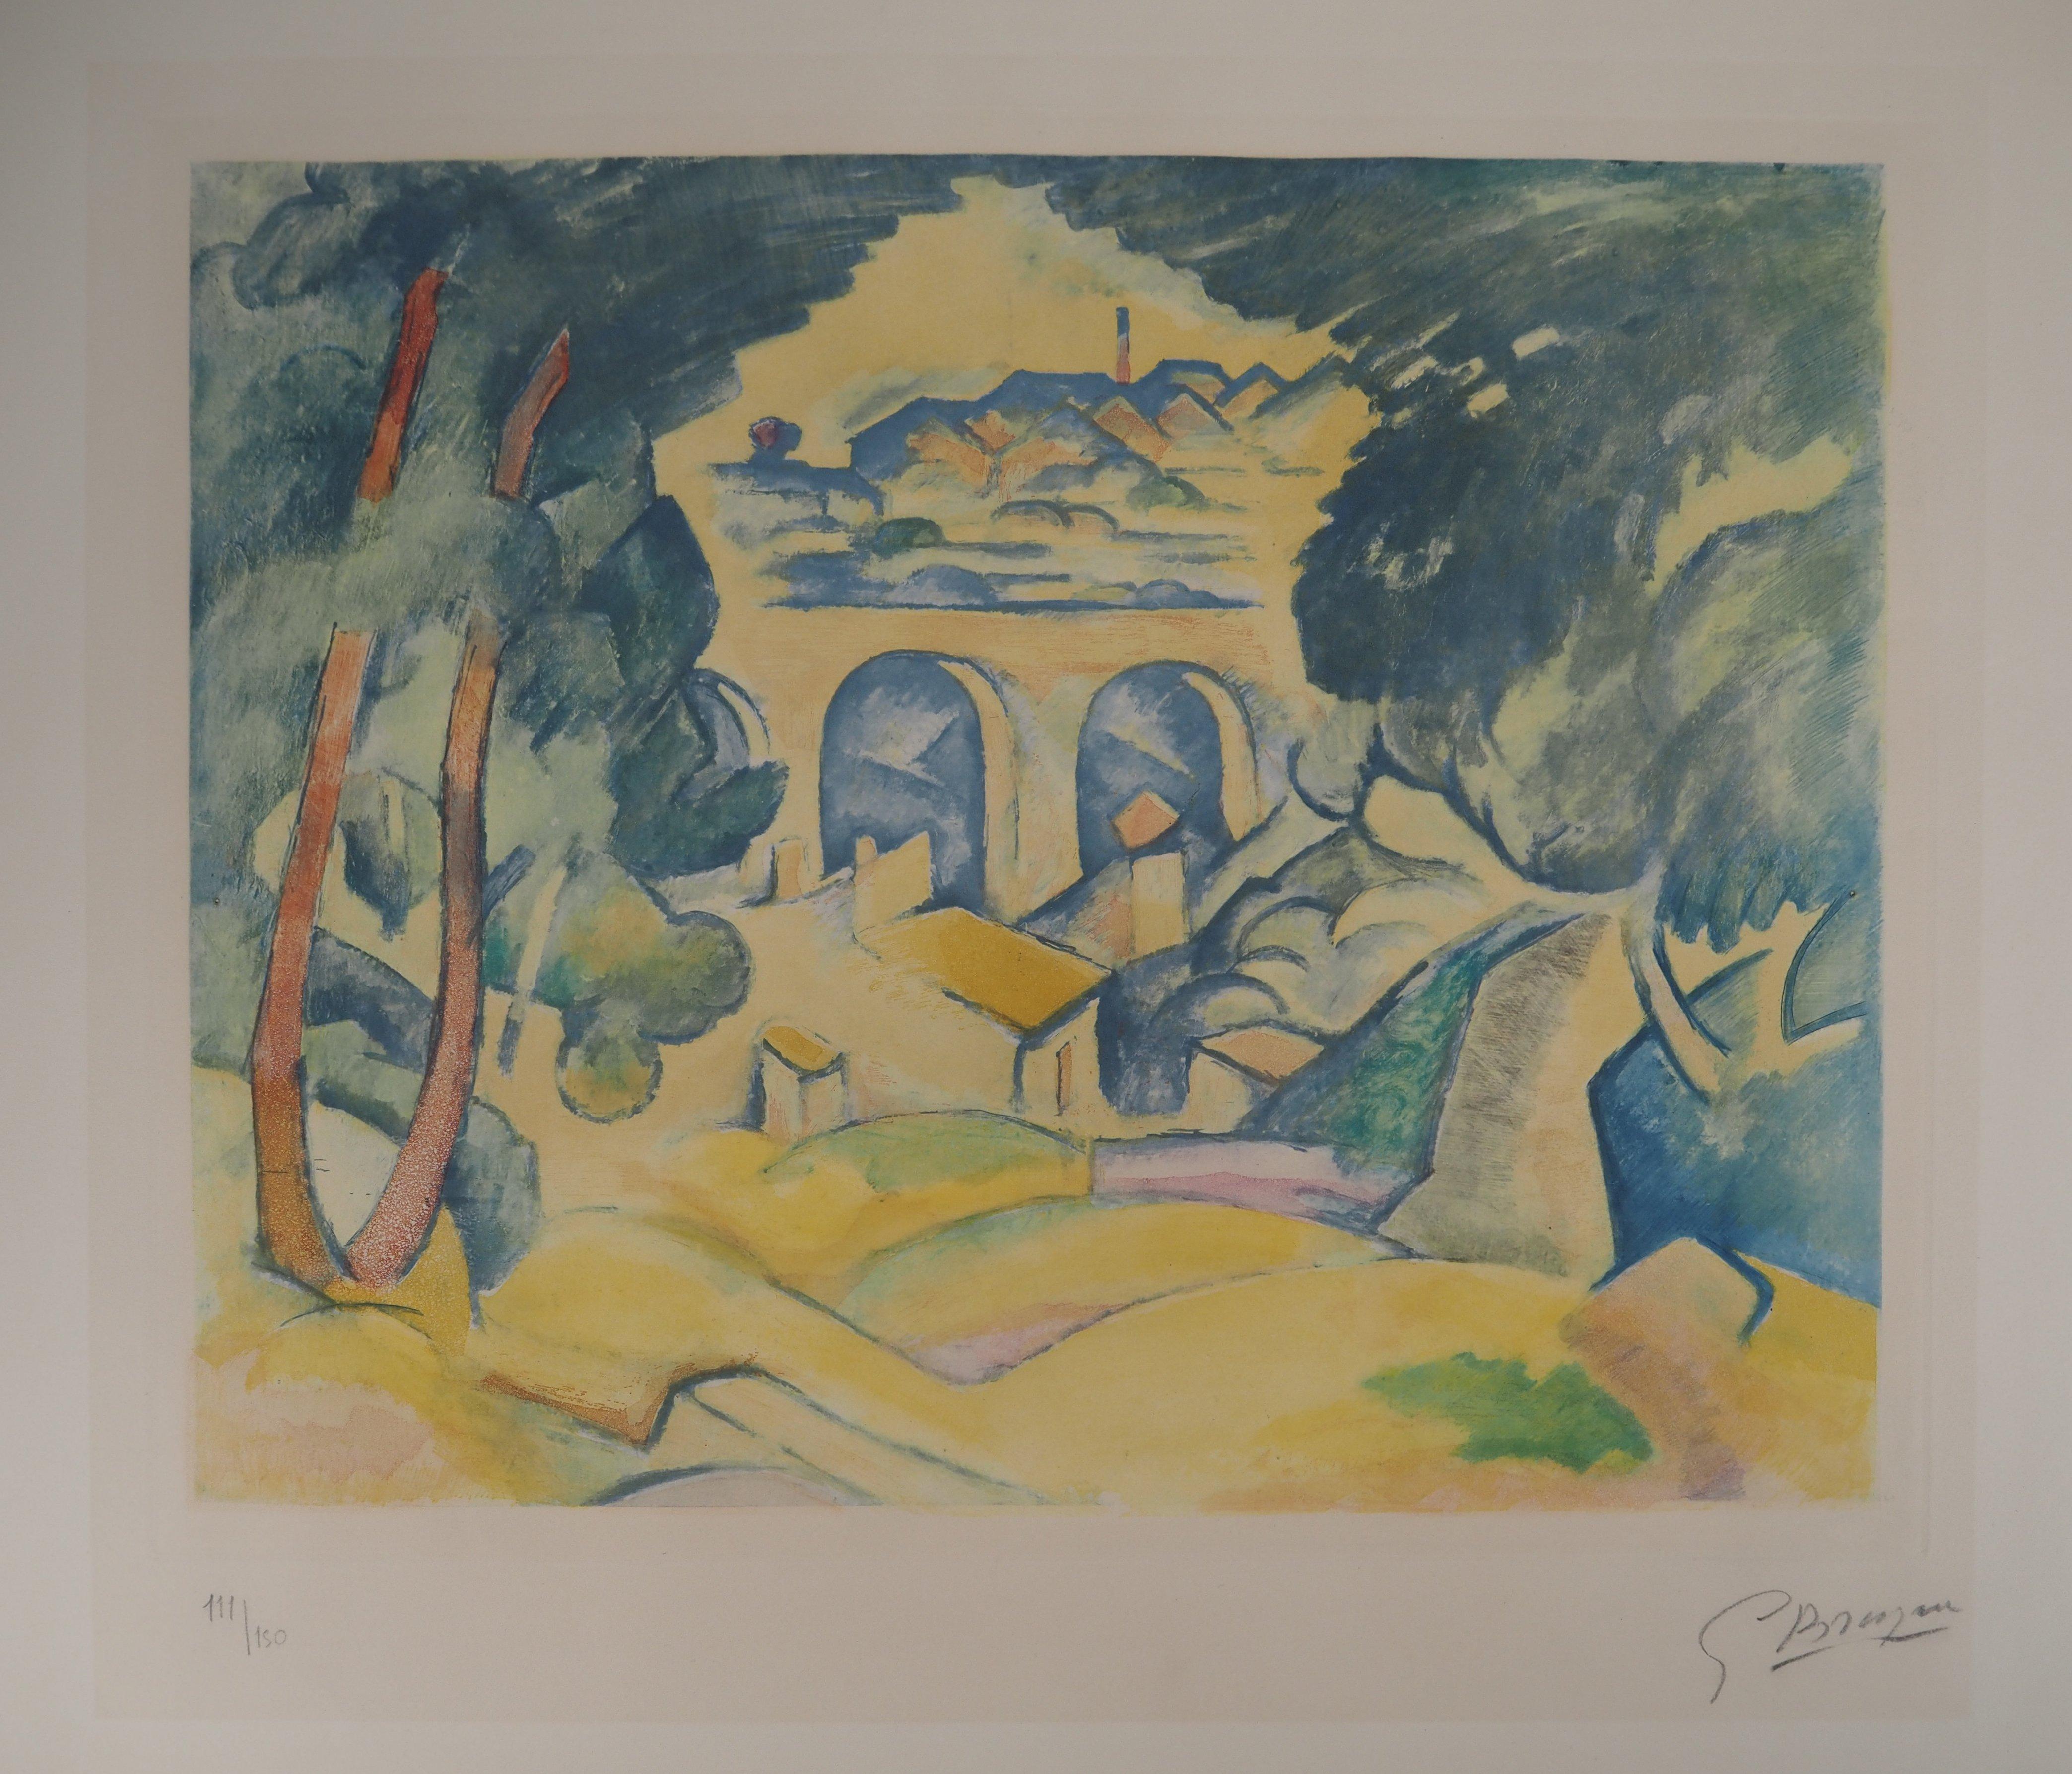 George Braque Landscape Print - Tribute to Cezanne : Estaque Bridge - Original etching, SIGNED (Orozco #776)